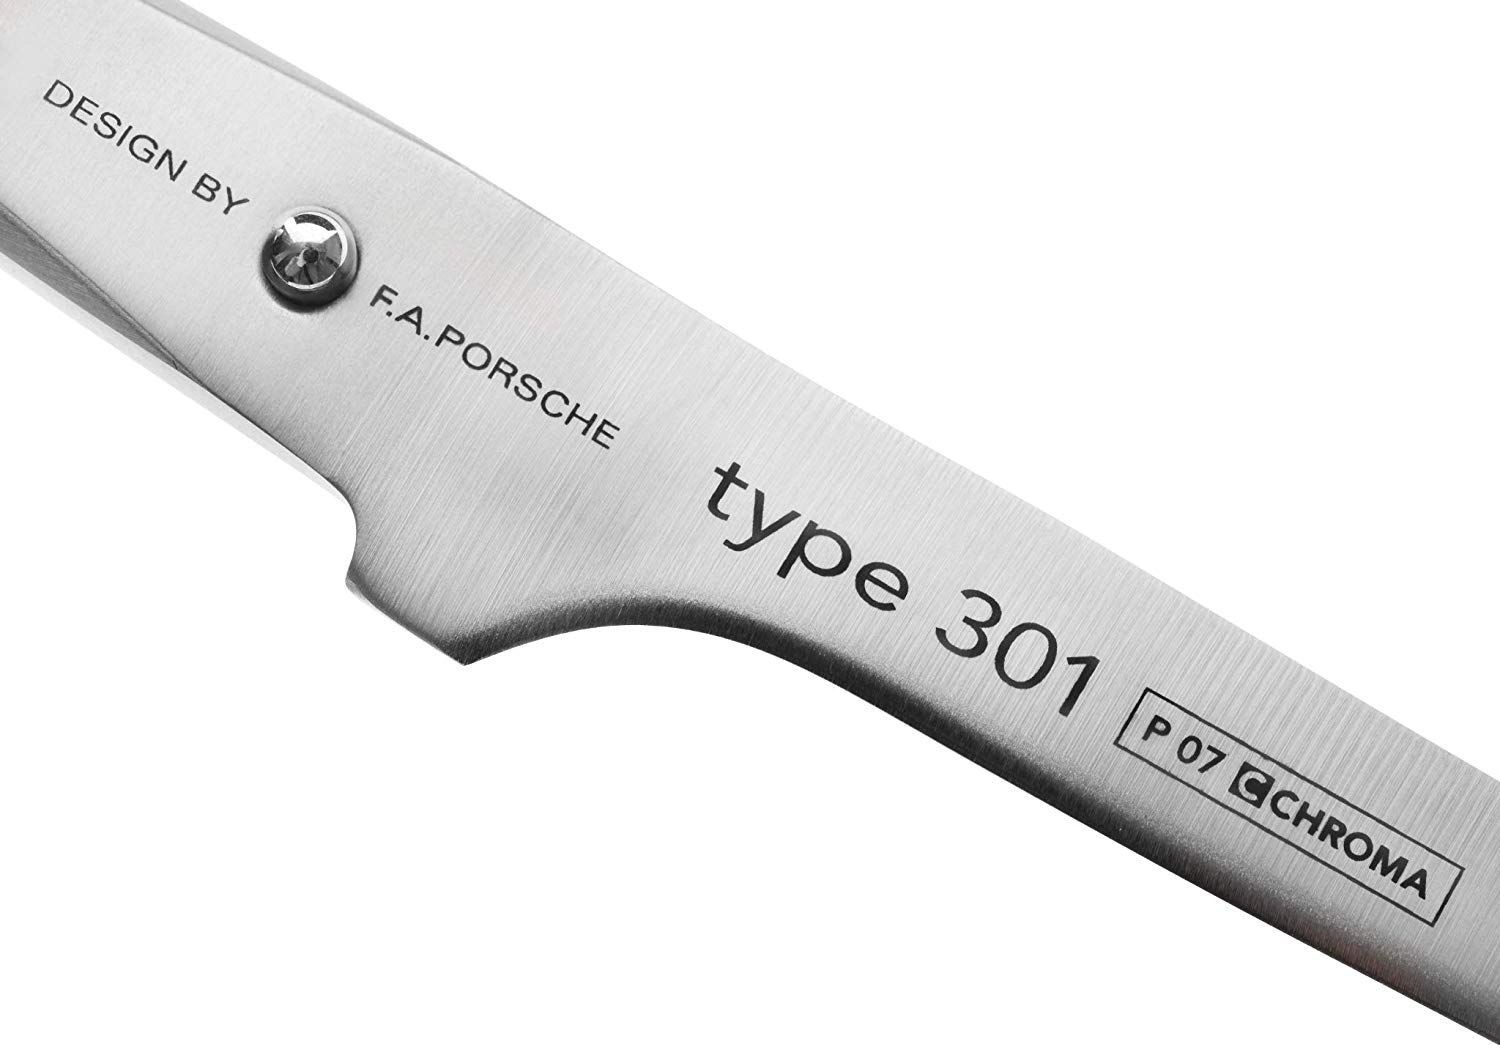 Chroma P07 Type 301 Flexible Filet Knife, 7.75″ | Chef Kent Rathbun